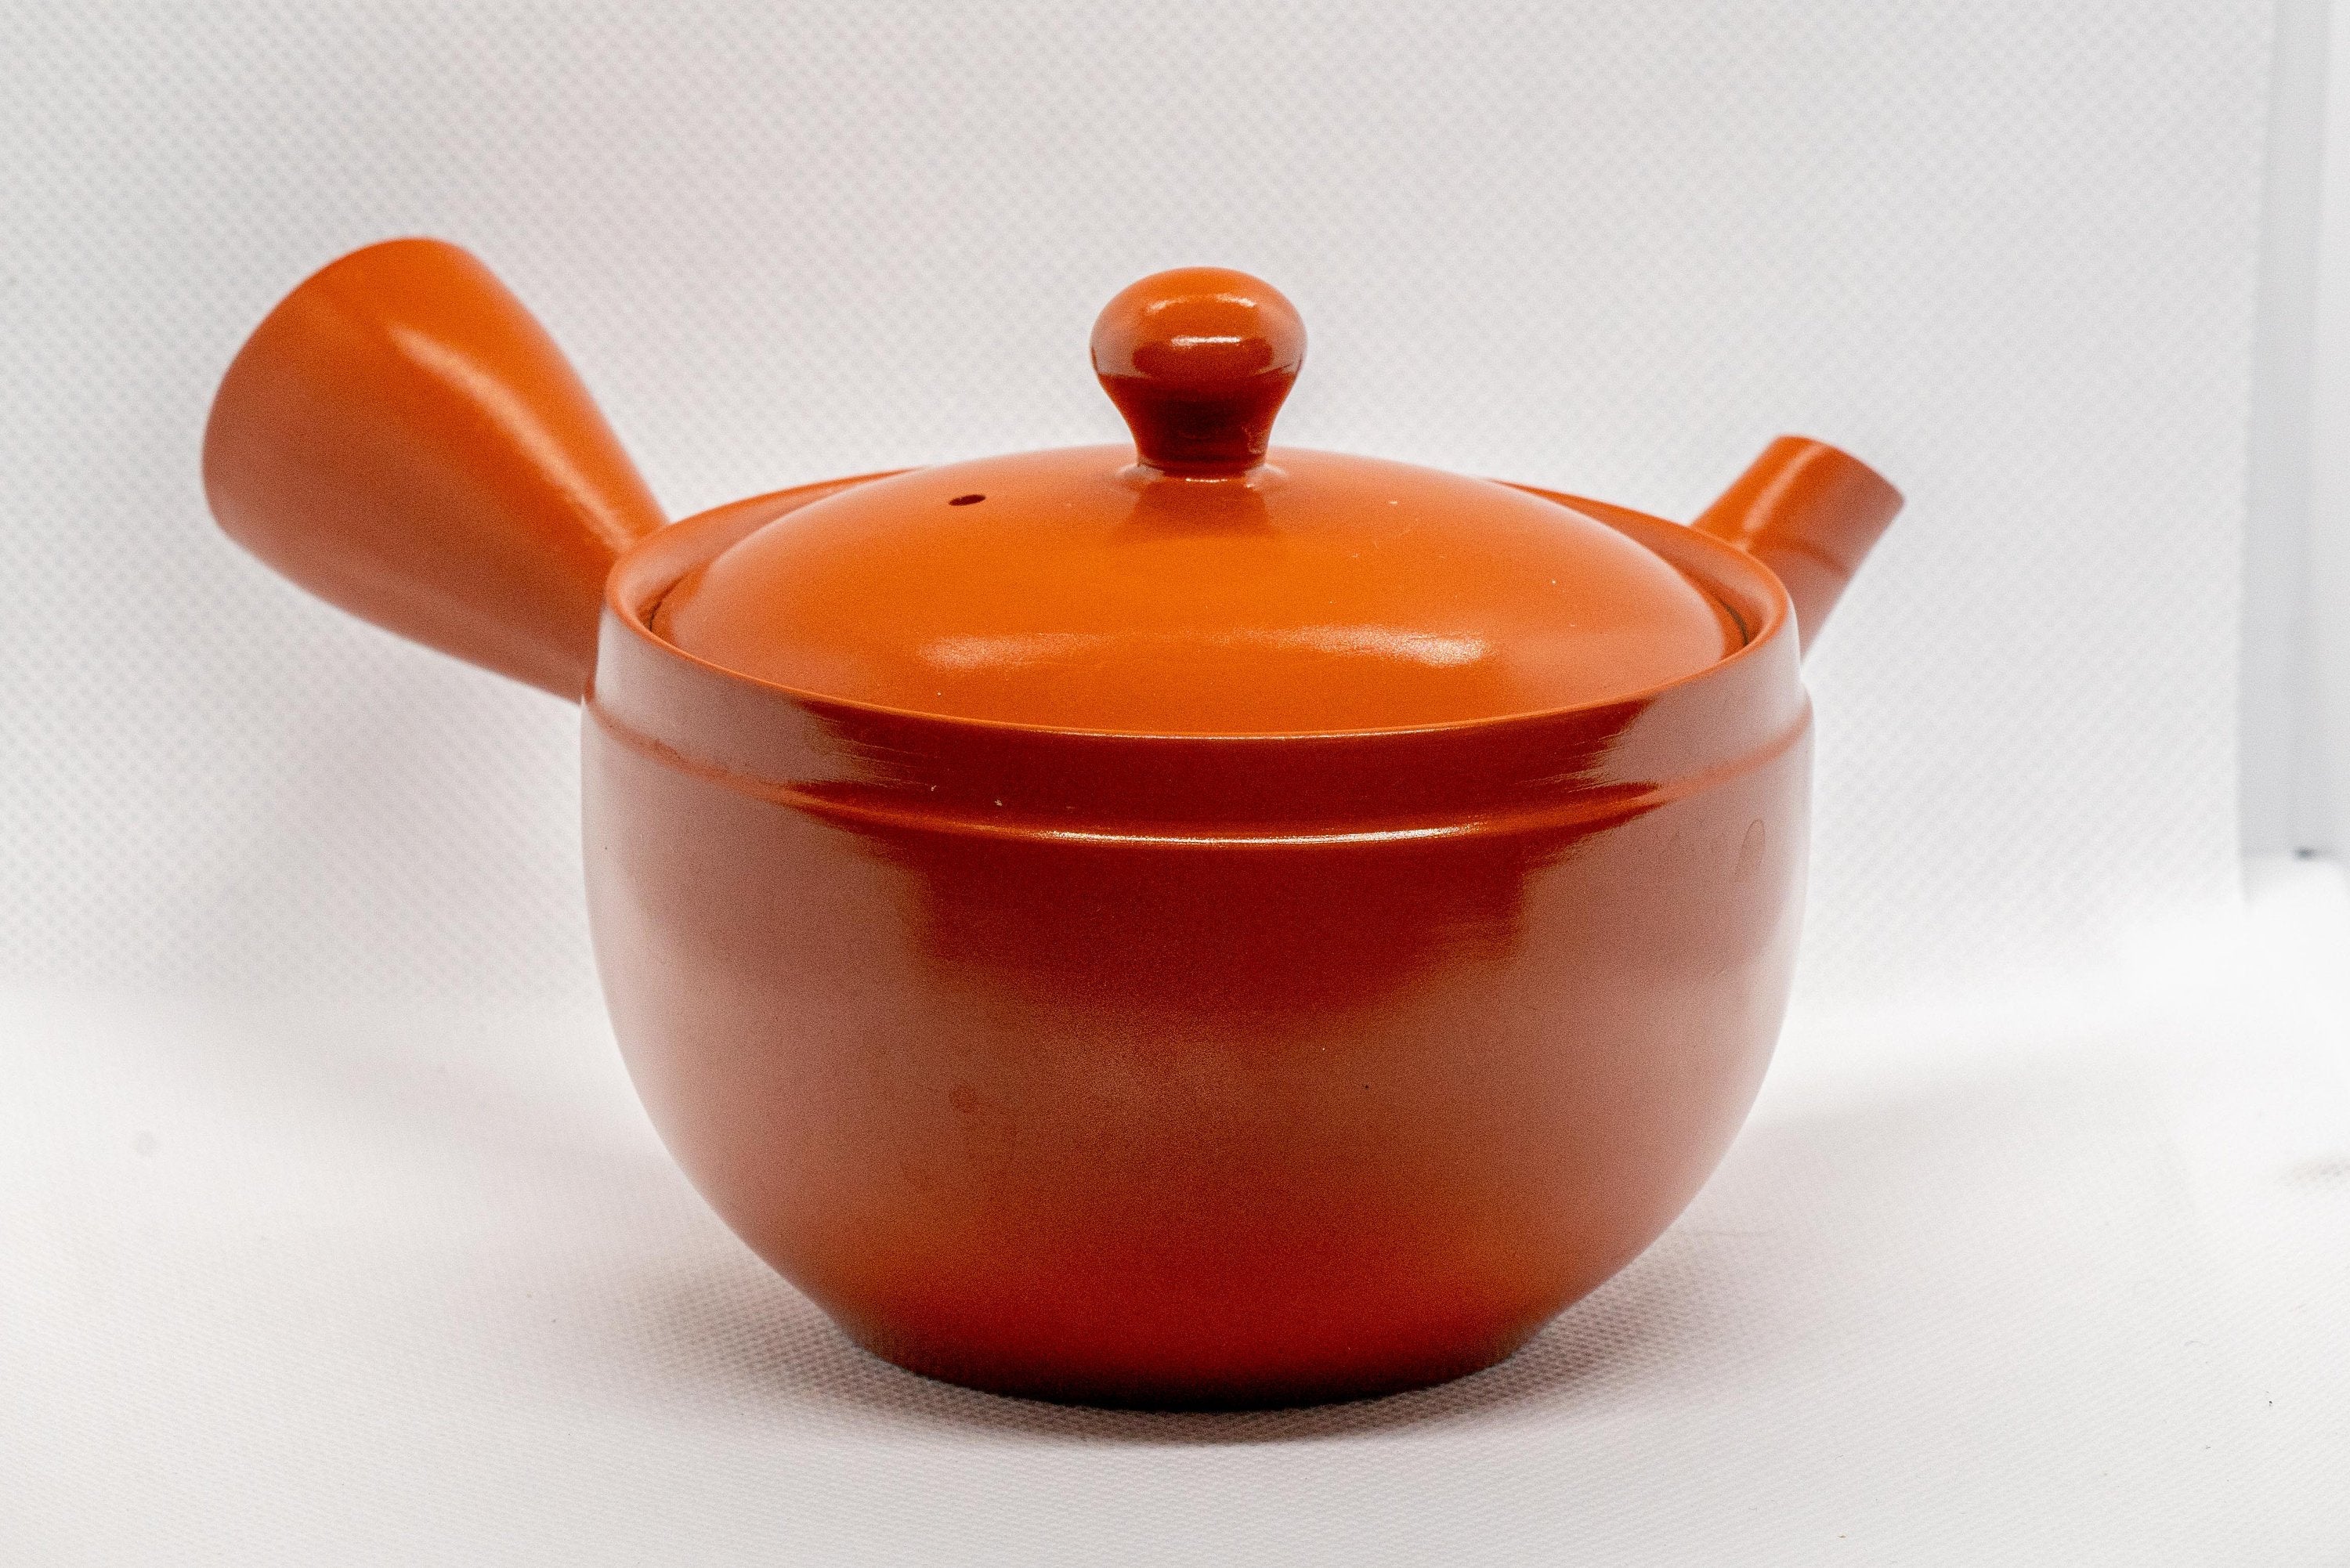 Japanese Kyusu - いわ多 Red Shudei Tokoname-yaki Ceramic Teapot - 275ml